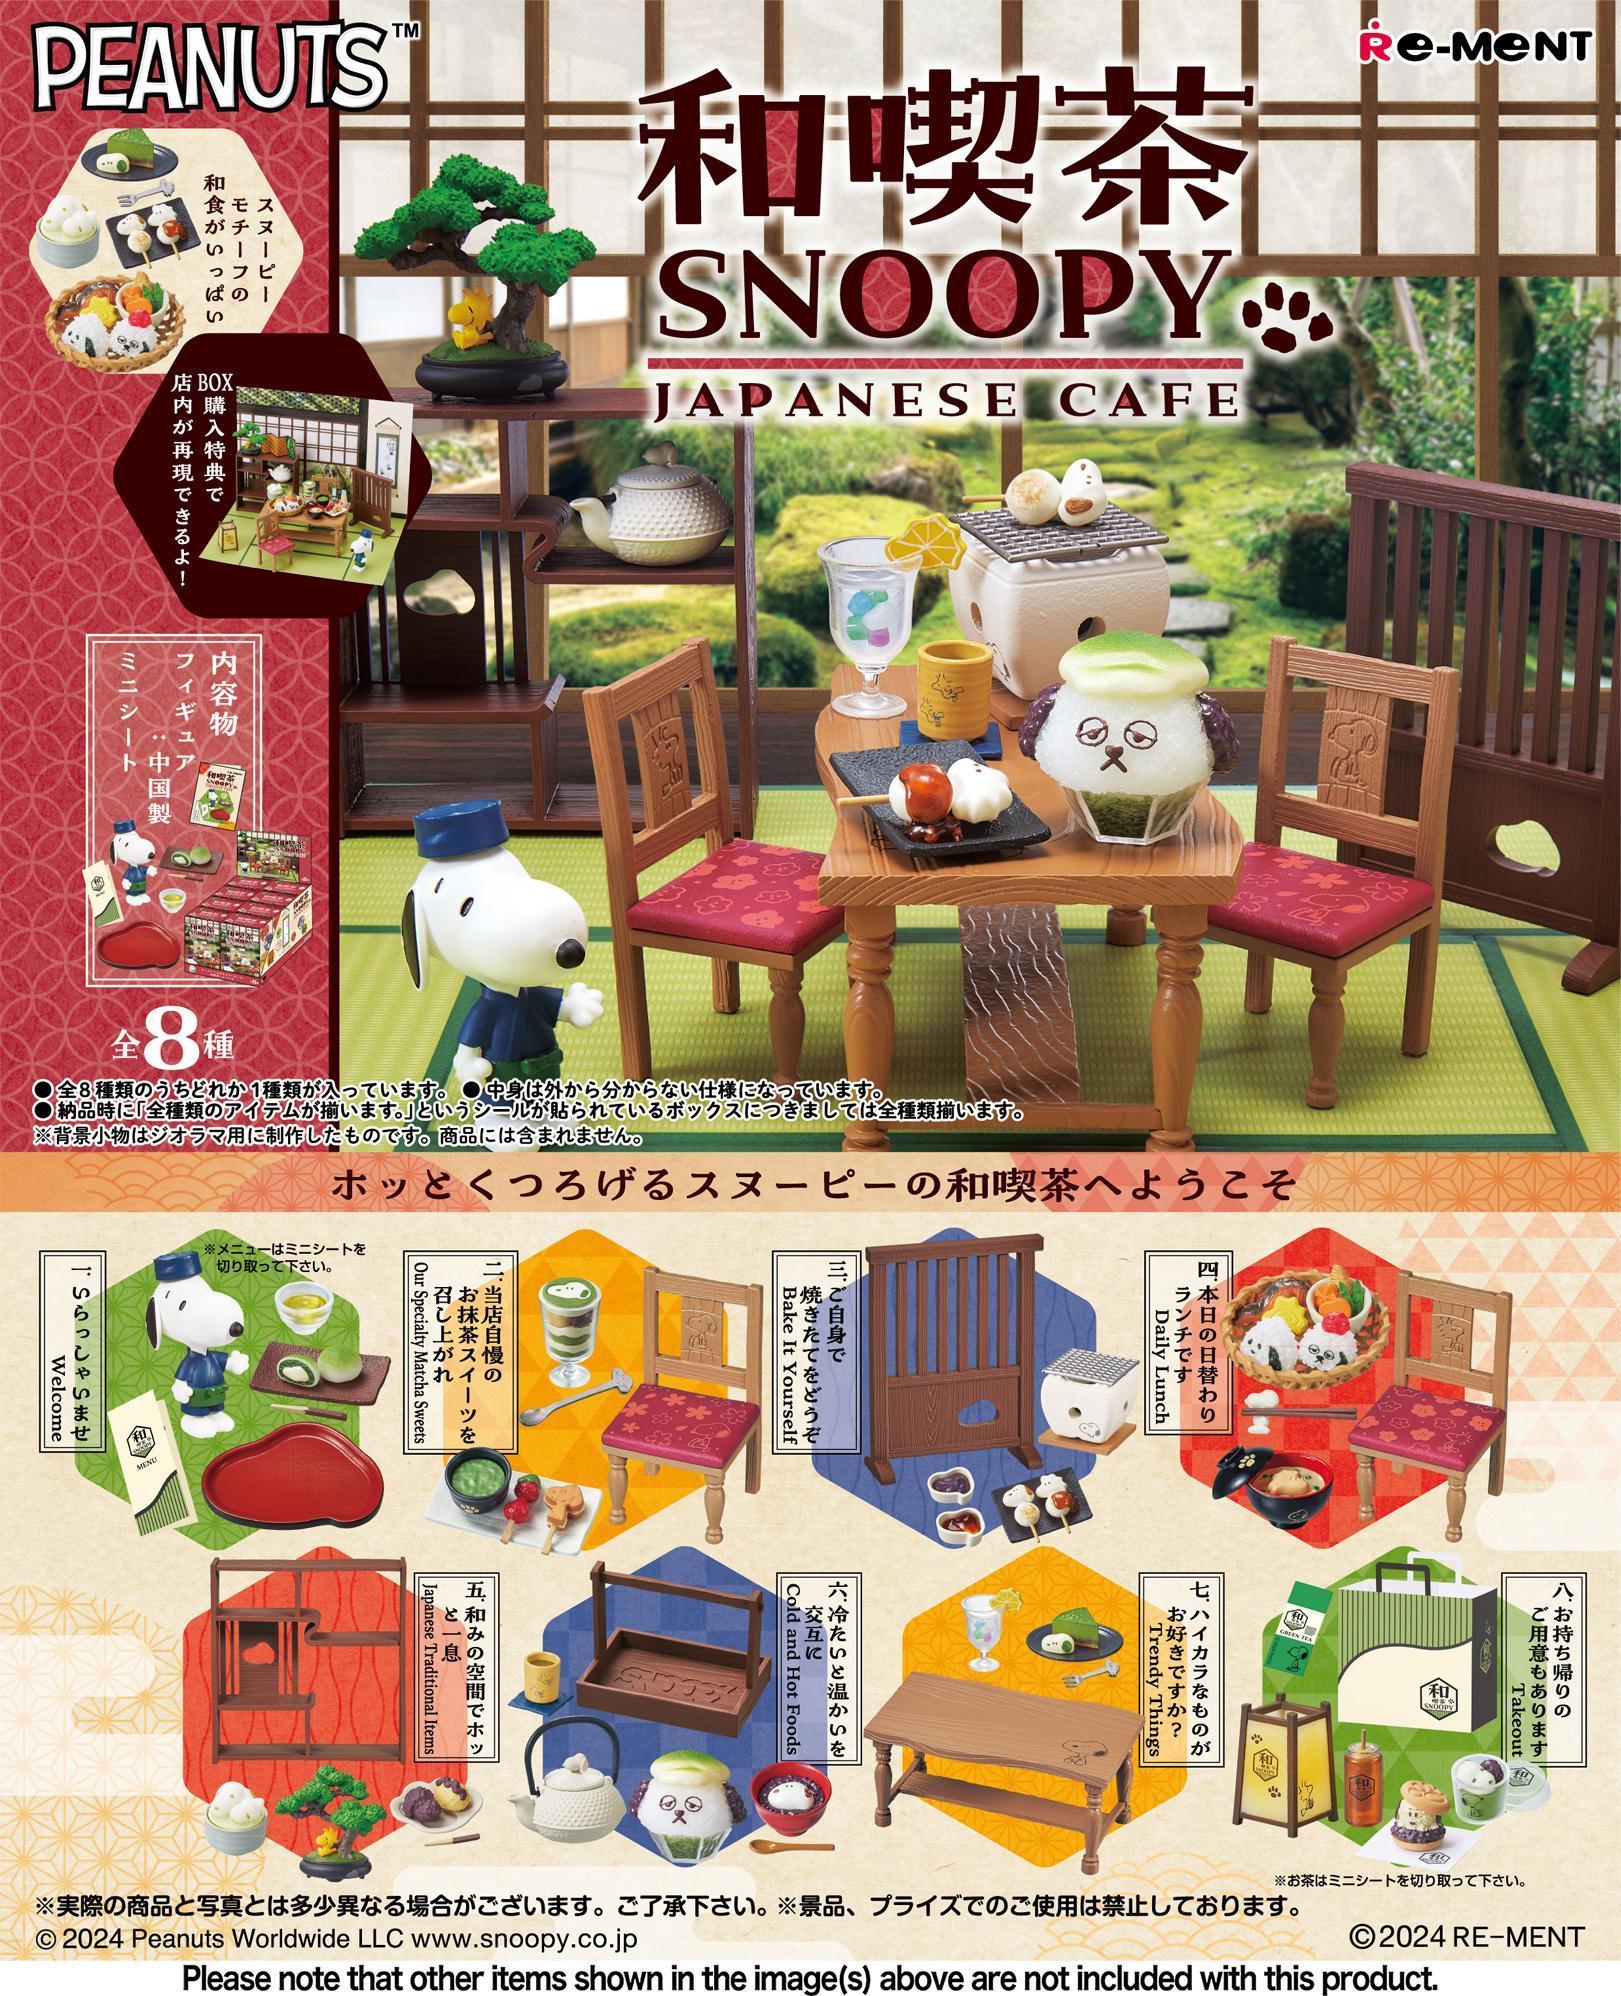 Peanuts - Japanese Cafe Snoopy